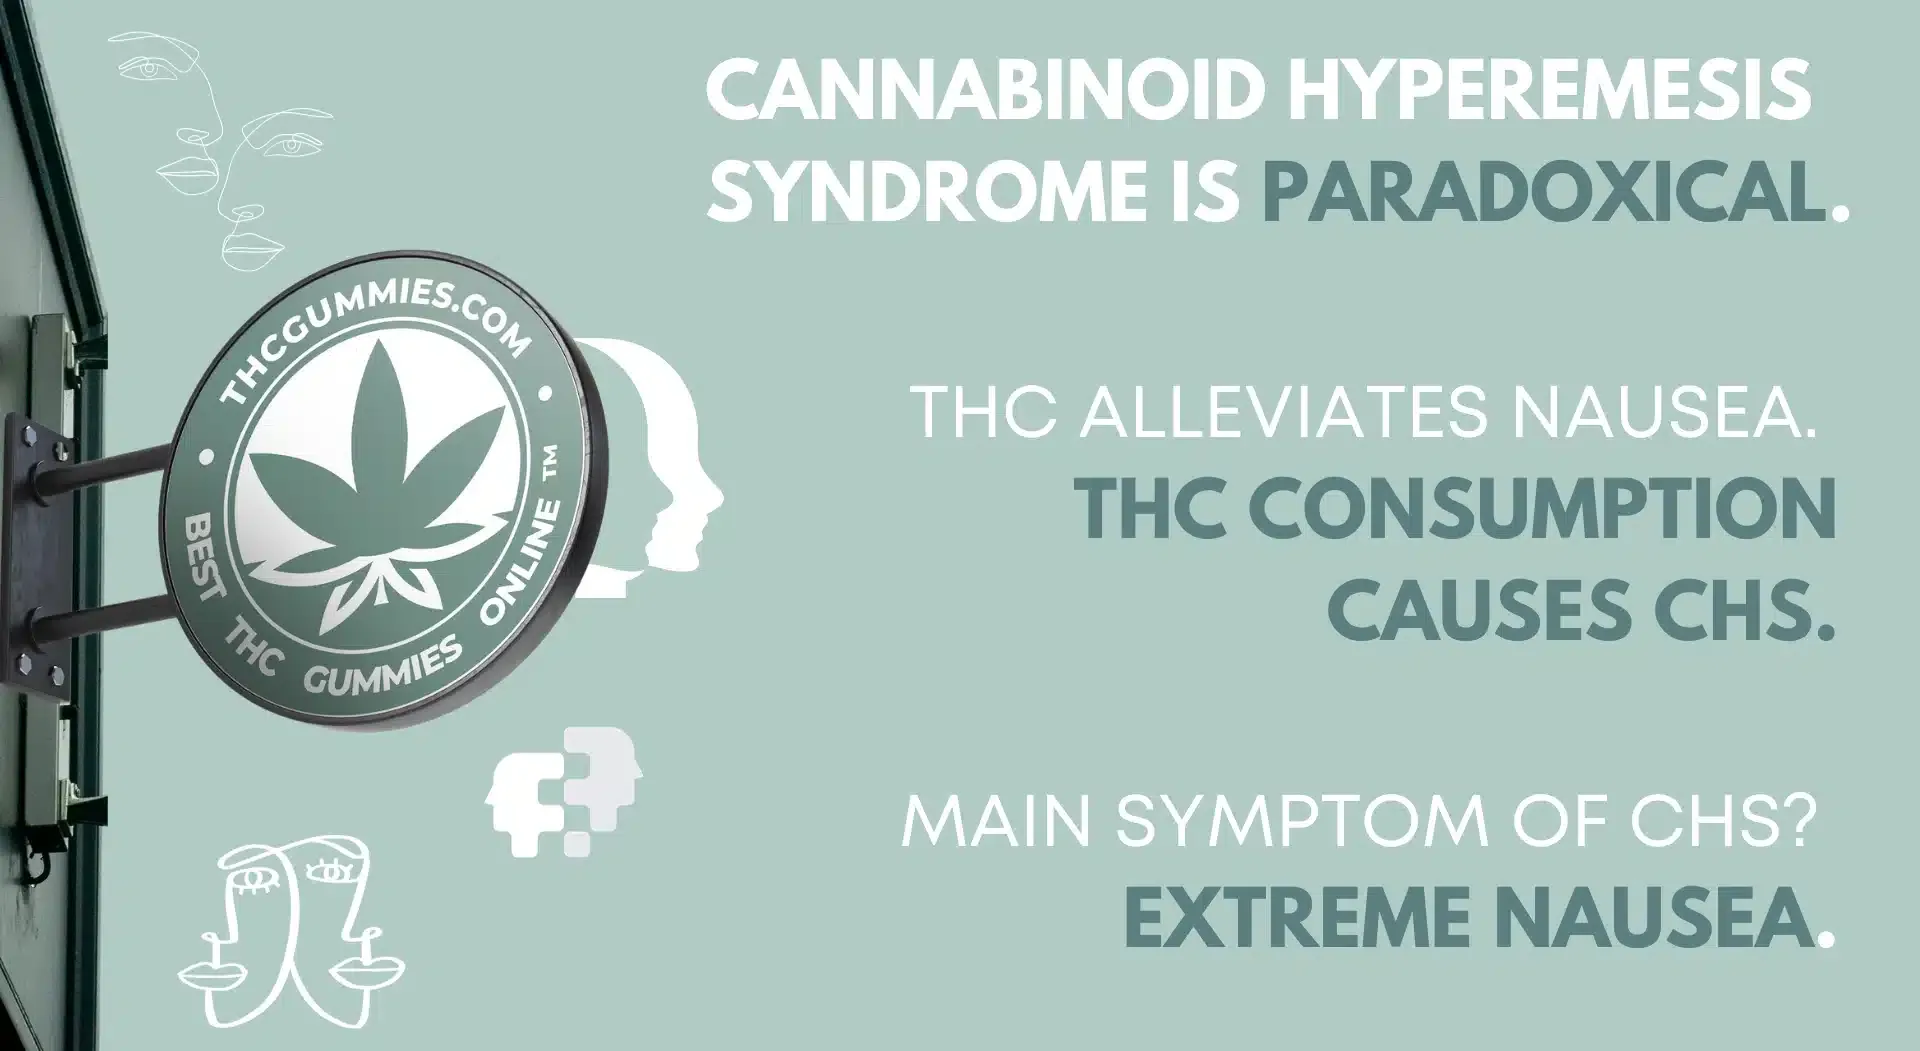 Cannabinoid hyperemesis syndrome is paradoxical. Thc alleviates nausea. Thc consumption causes chs. Main symptom of chs? Extreme nausea.